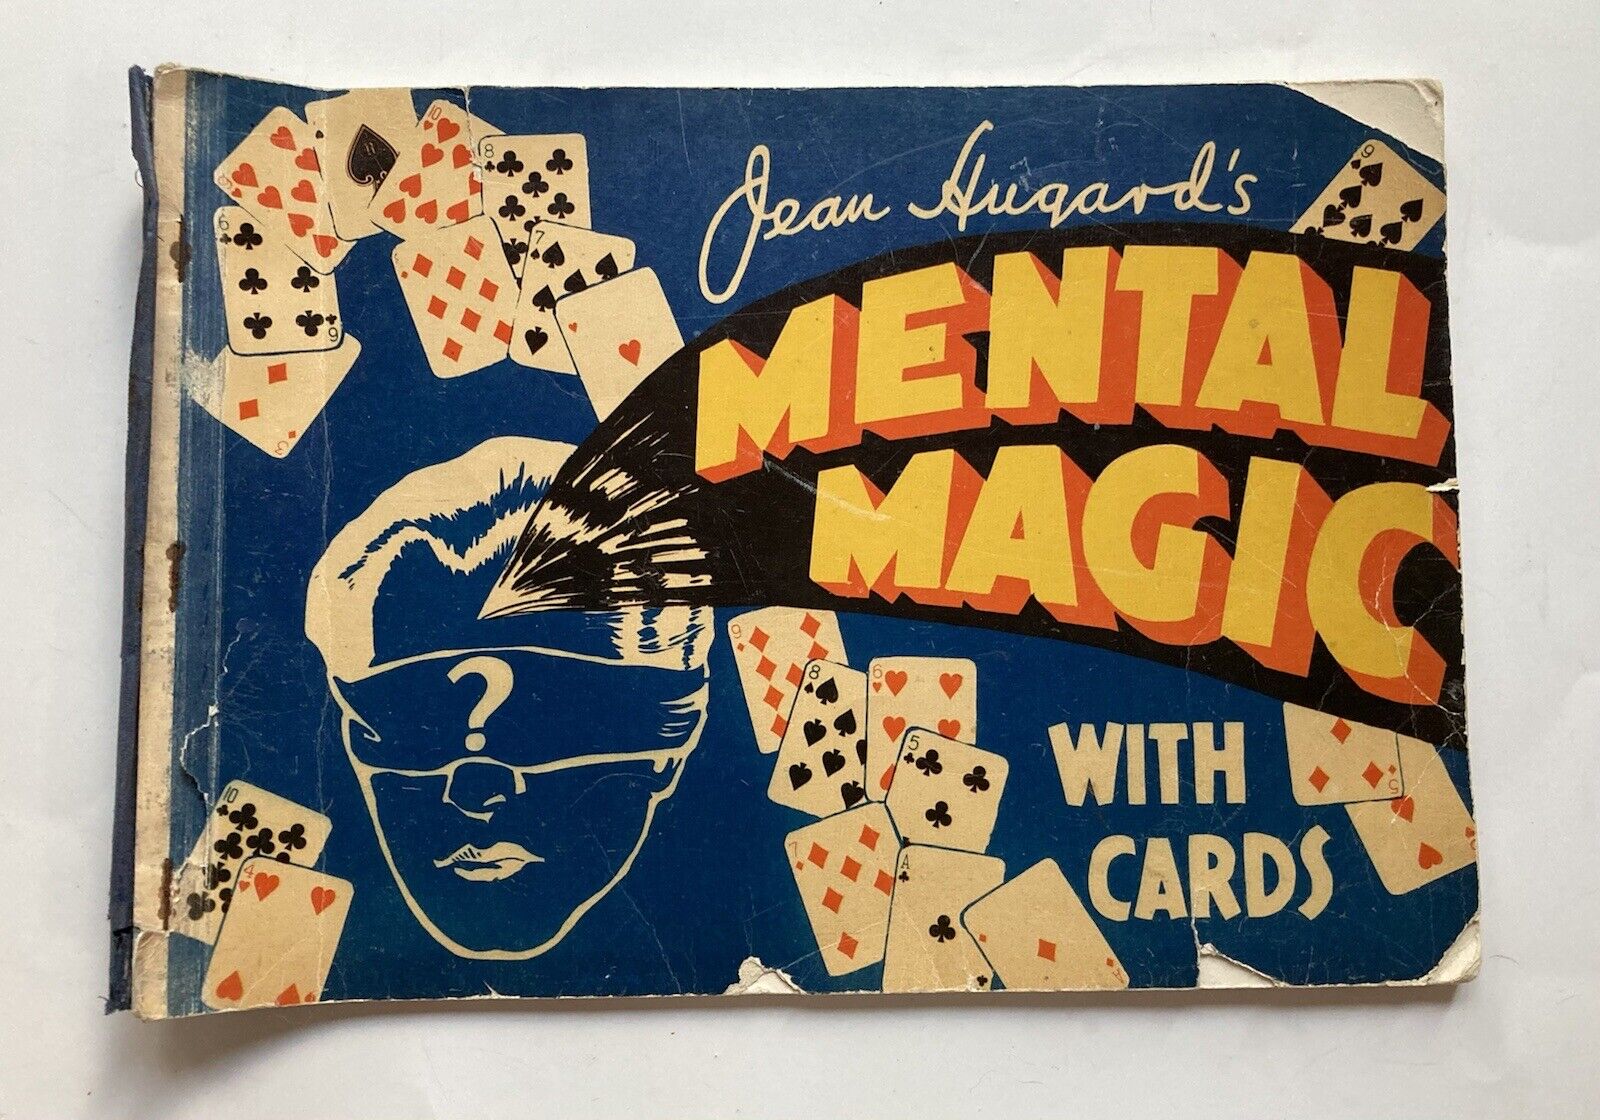 1935 ~ Jean Hugard’s Mental Magic with Cards